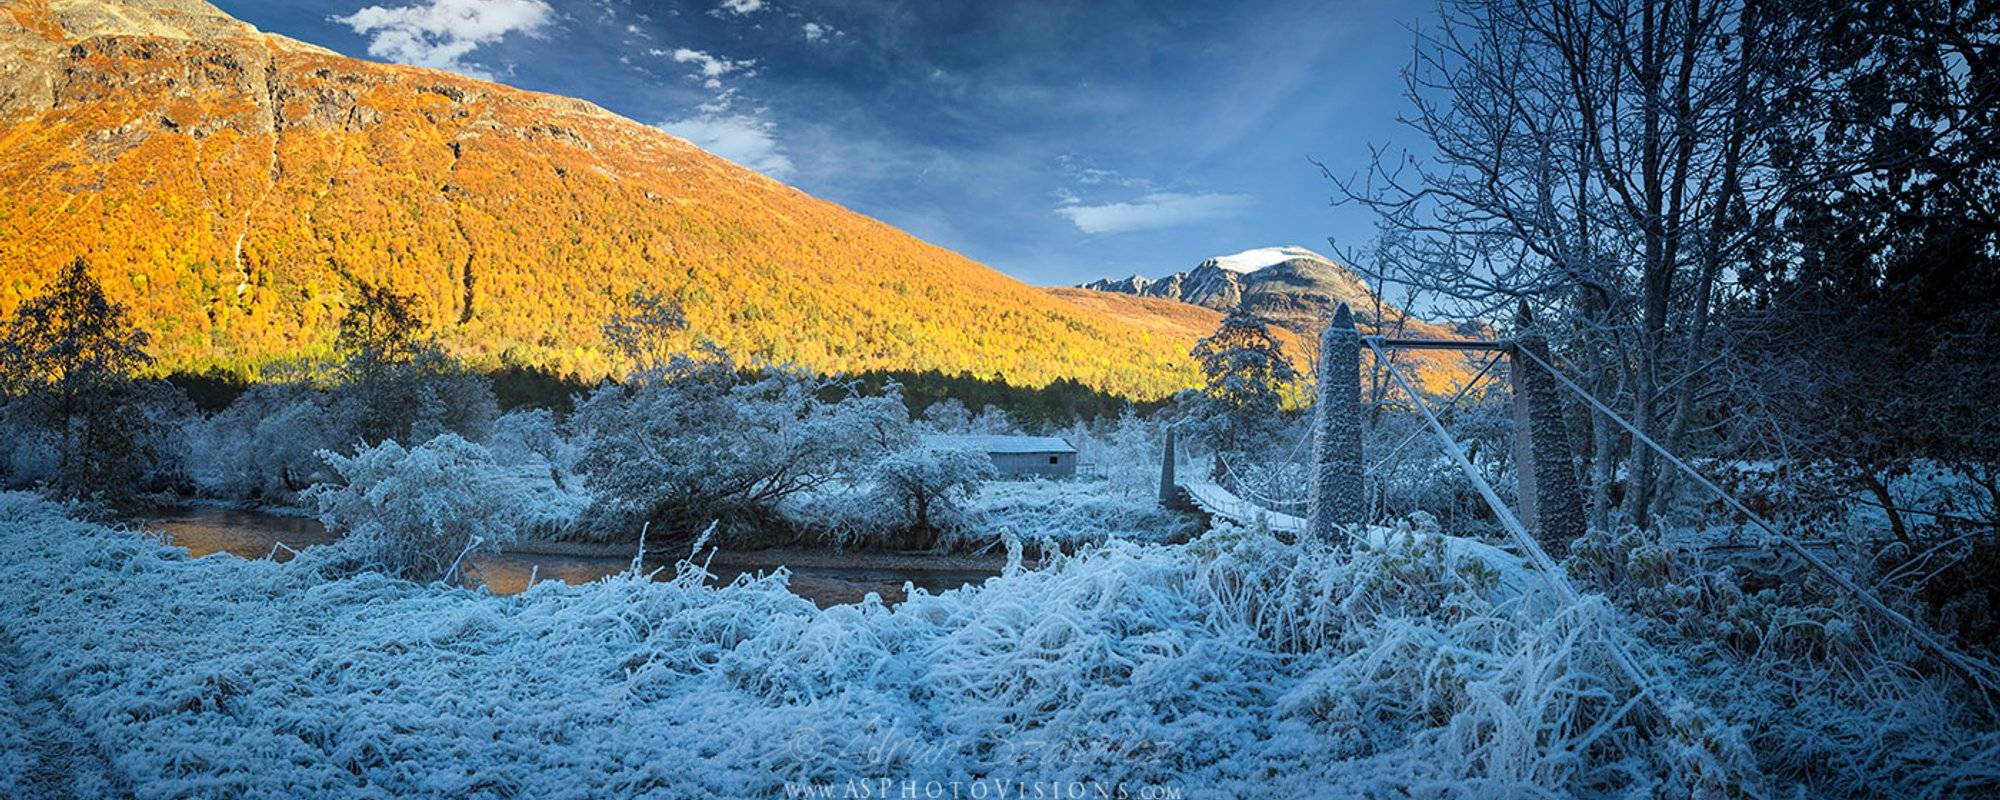 Travel Norway #20 - Where winter & autumn meets - Autumnal visit in Viromdalen and Innerdalen